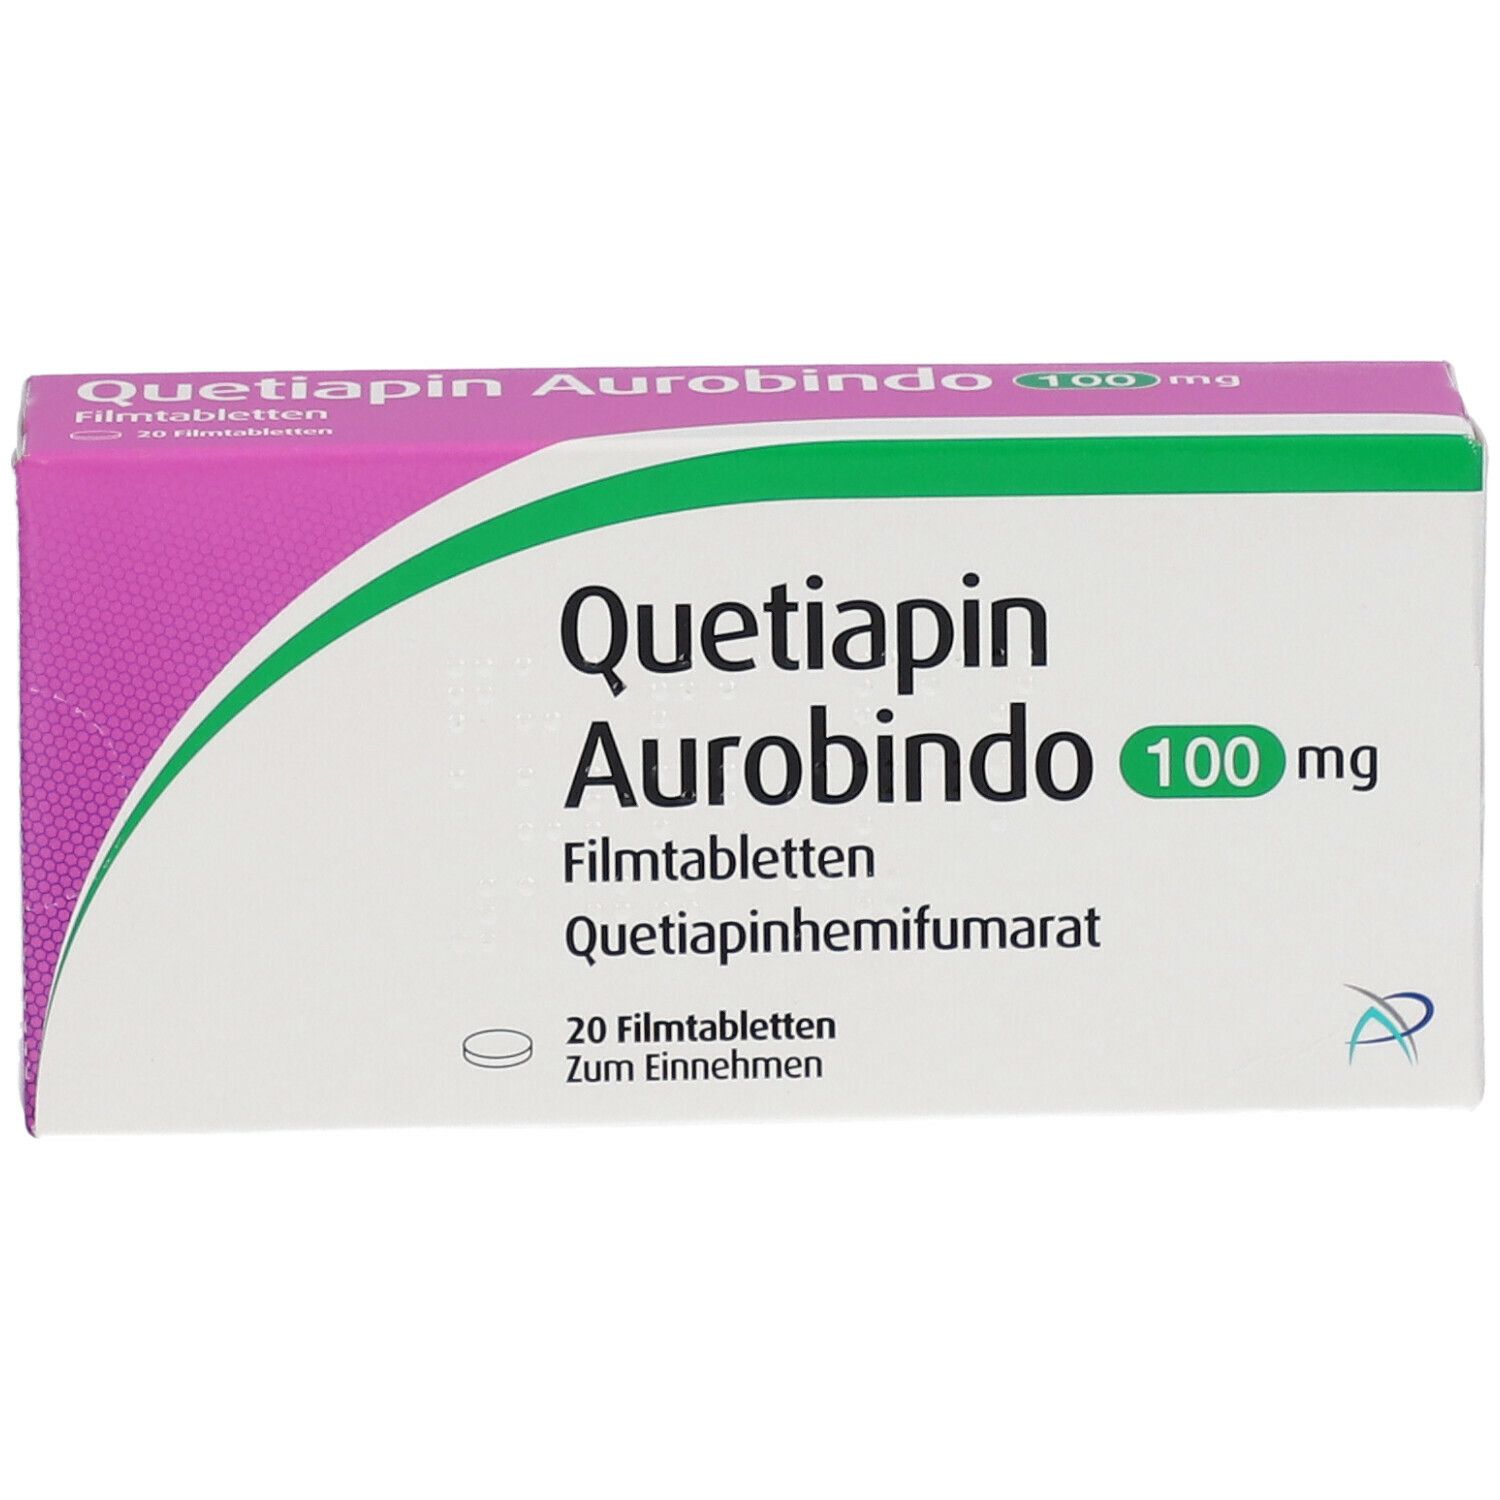 Quetiapin Aurobindo 100 mg